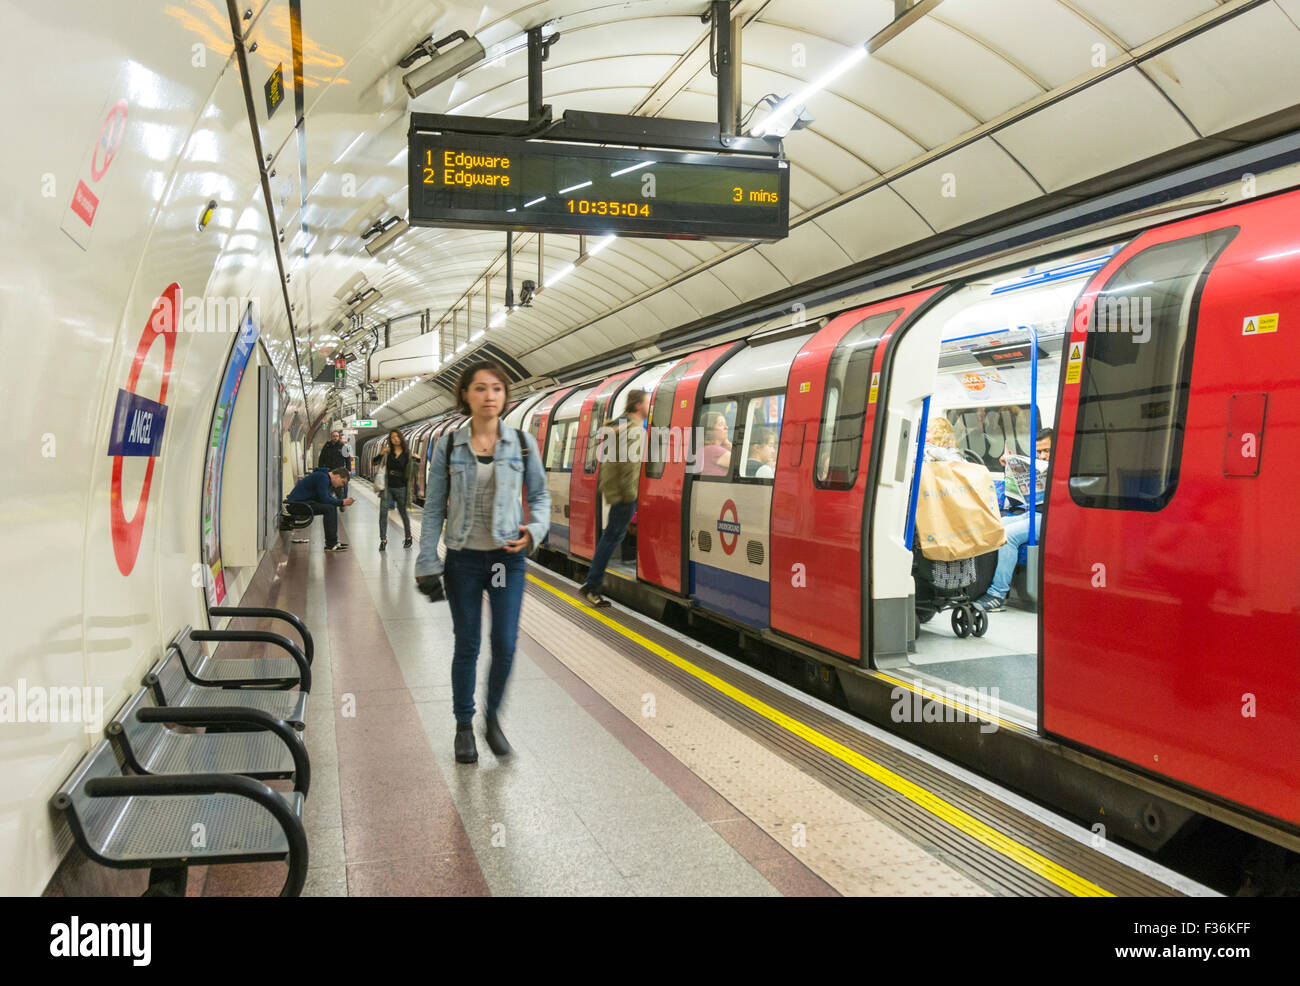 Pendler nach dem Aussteigen aus einem stationären u-Bahn an einer Londoner u-Bahn-Station Plattform London England UK Gb EU Europa Stockfoto